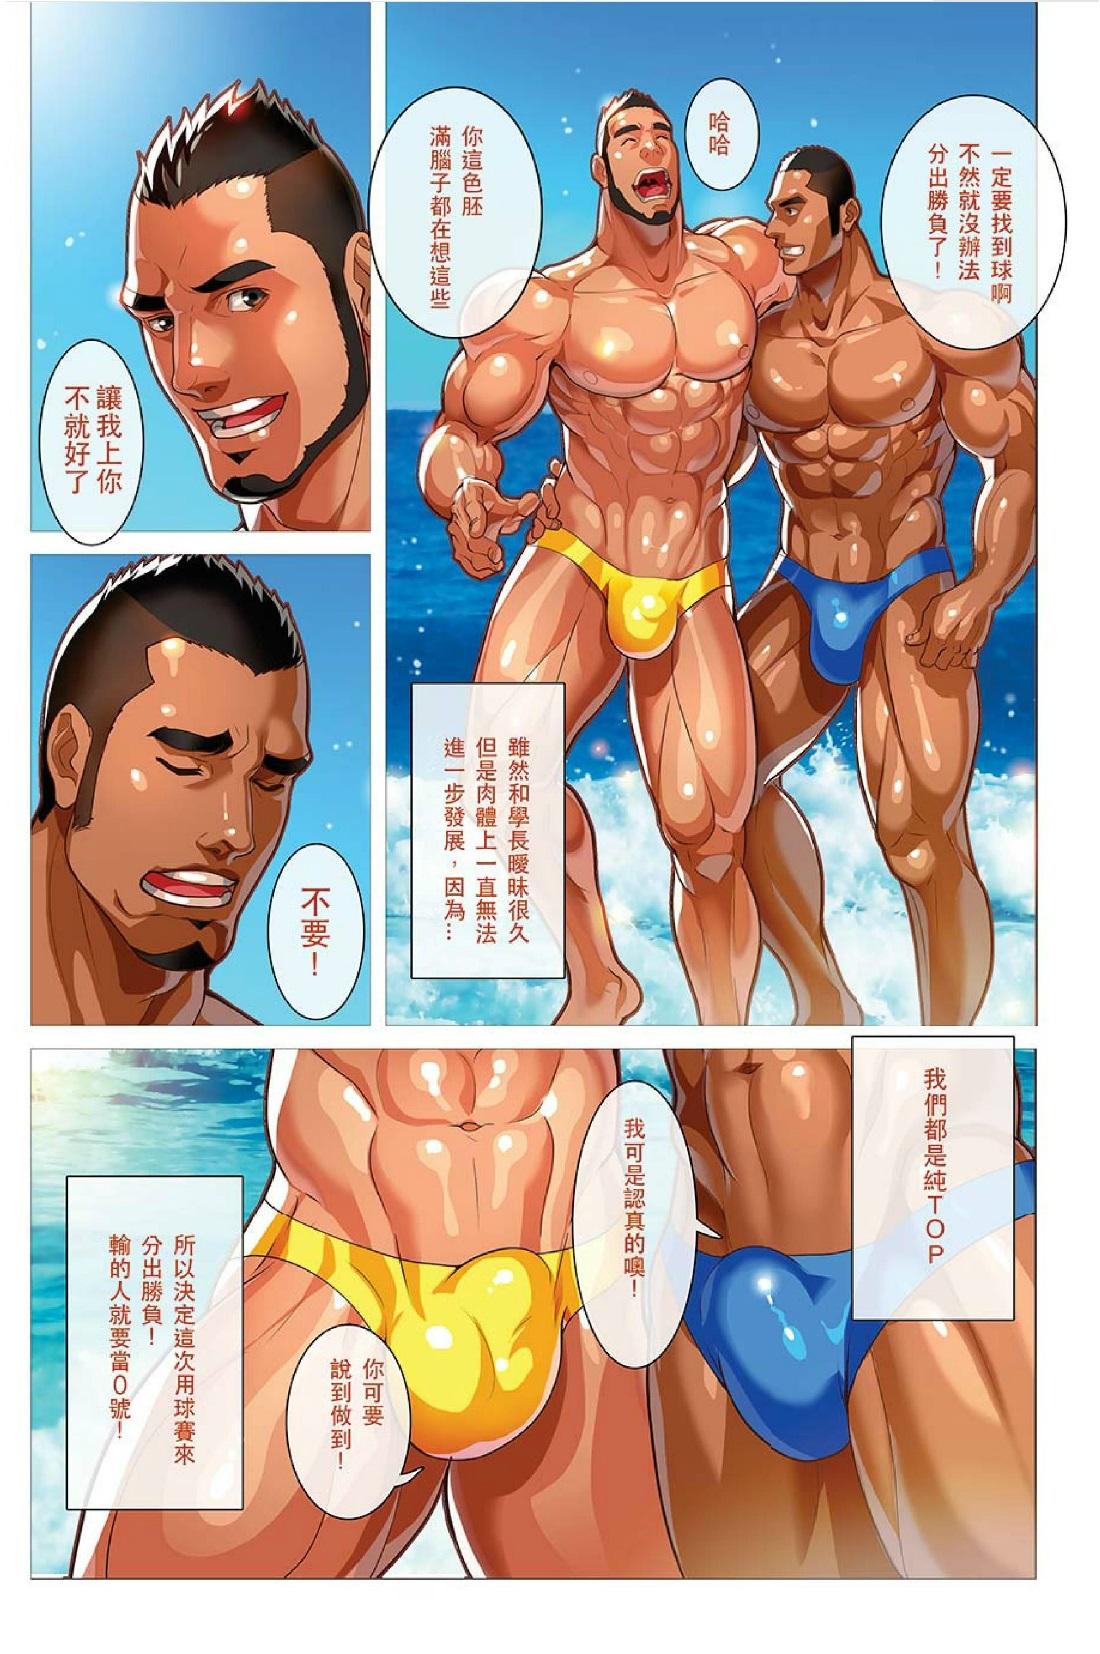 Bubble 夏日男子筋肉潛艇堡 (Summer's end Muscle Heat - The Boys Of Summer 2015) by 大雄 (Da Sexy Xiong) + Bonus Prequel [CH] Whatsapp - Page 4